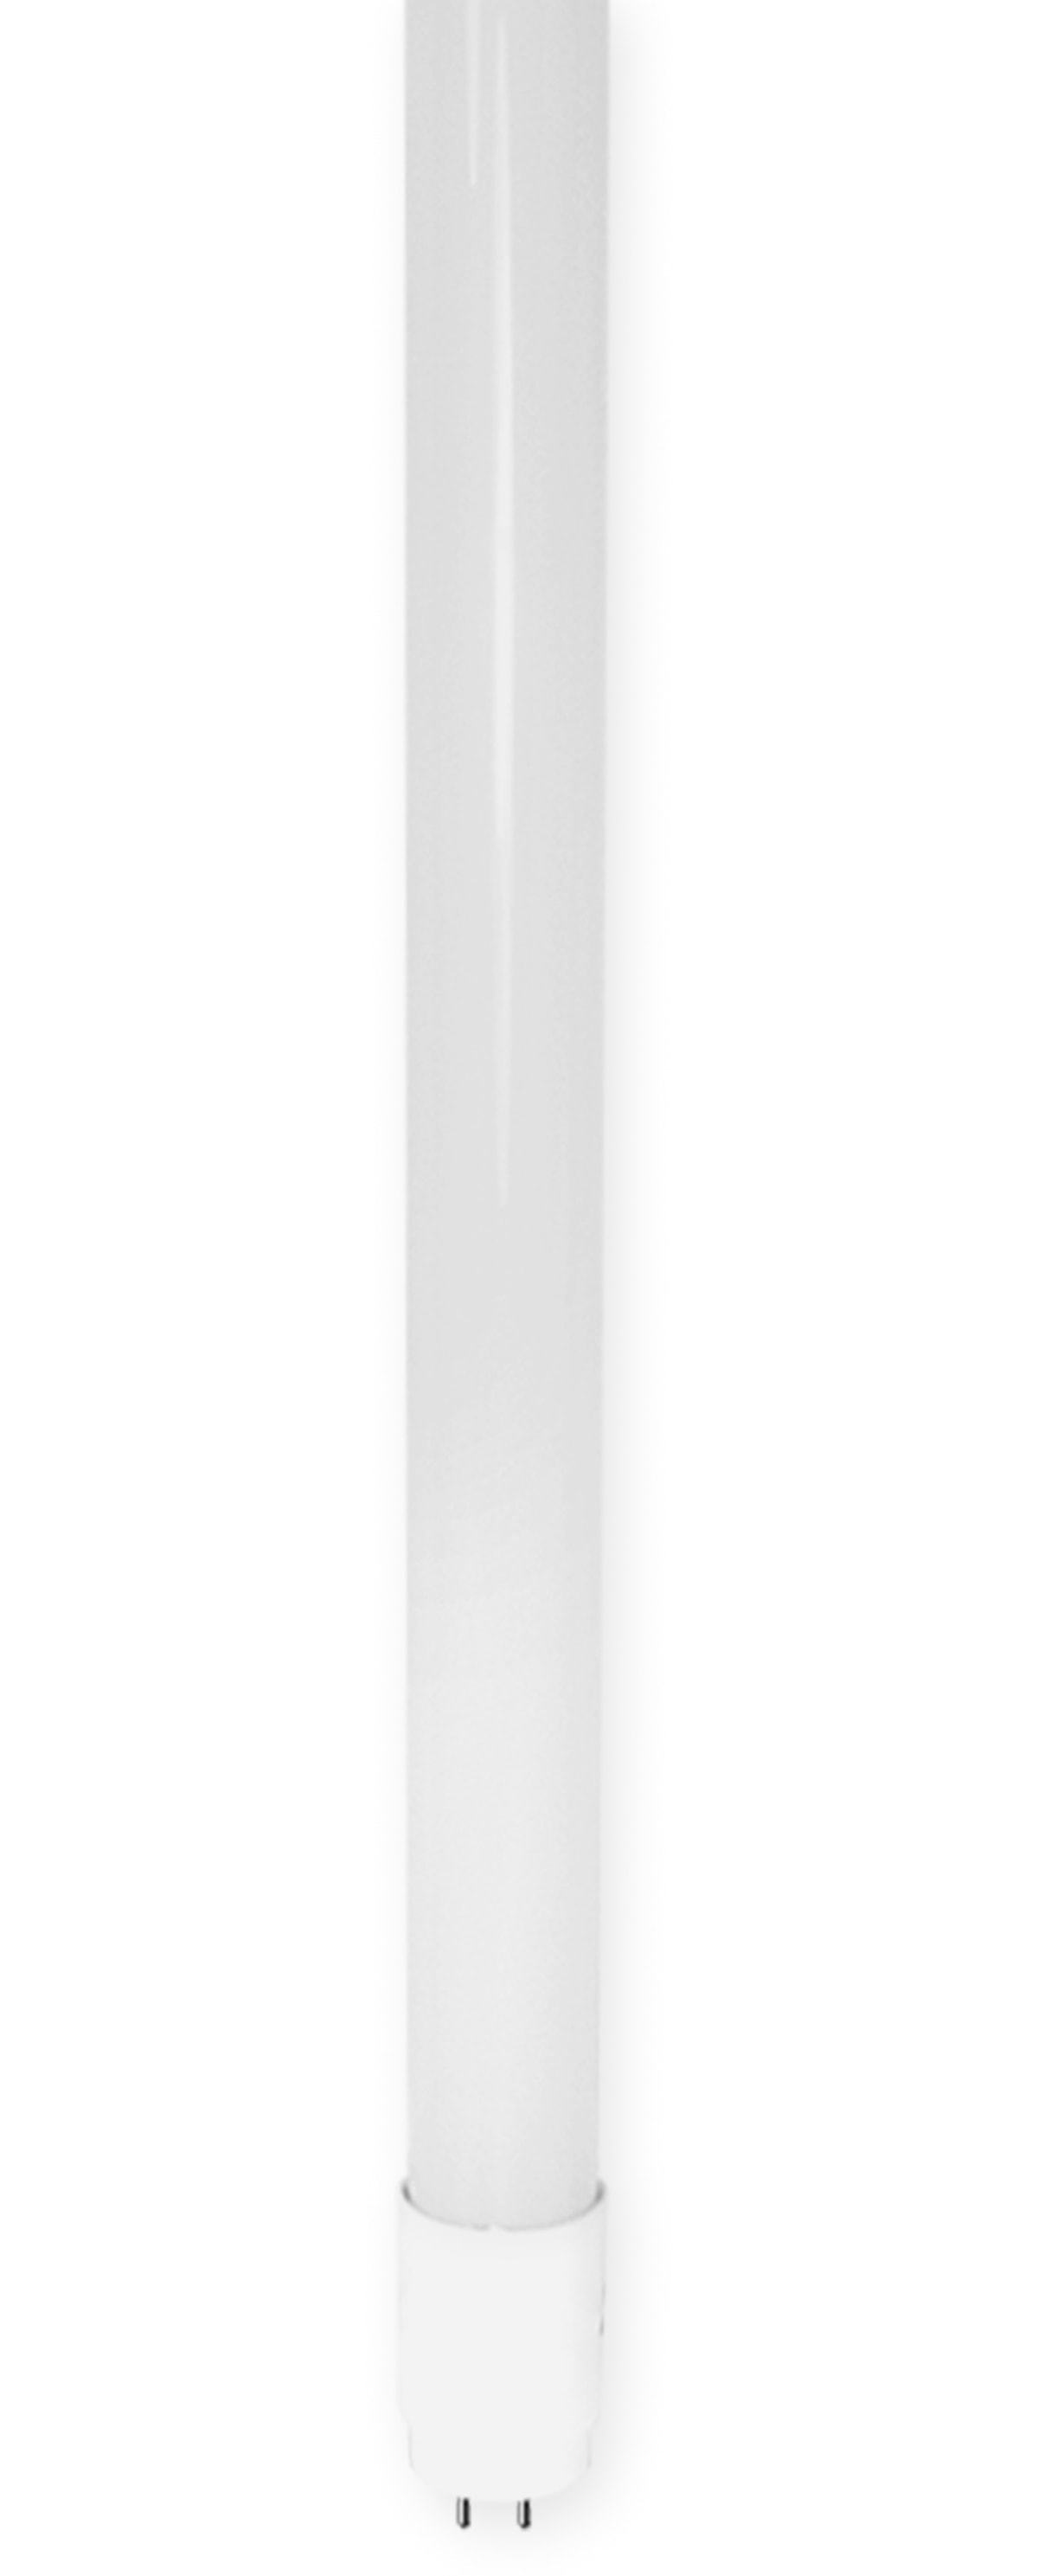 BLULAXA LED-Röhre 48543 High Lumen, EEK: D, 18 W, 2750 lm, G13, 6500 K, 120 cm